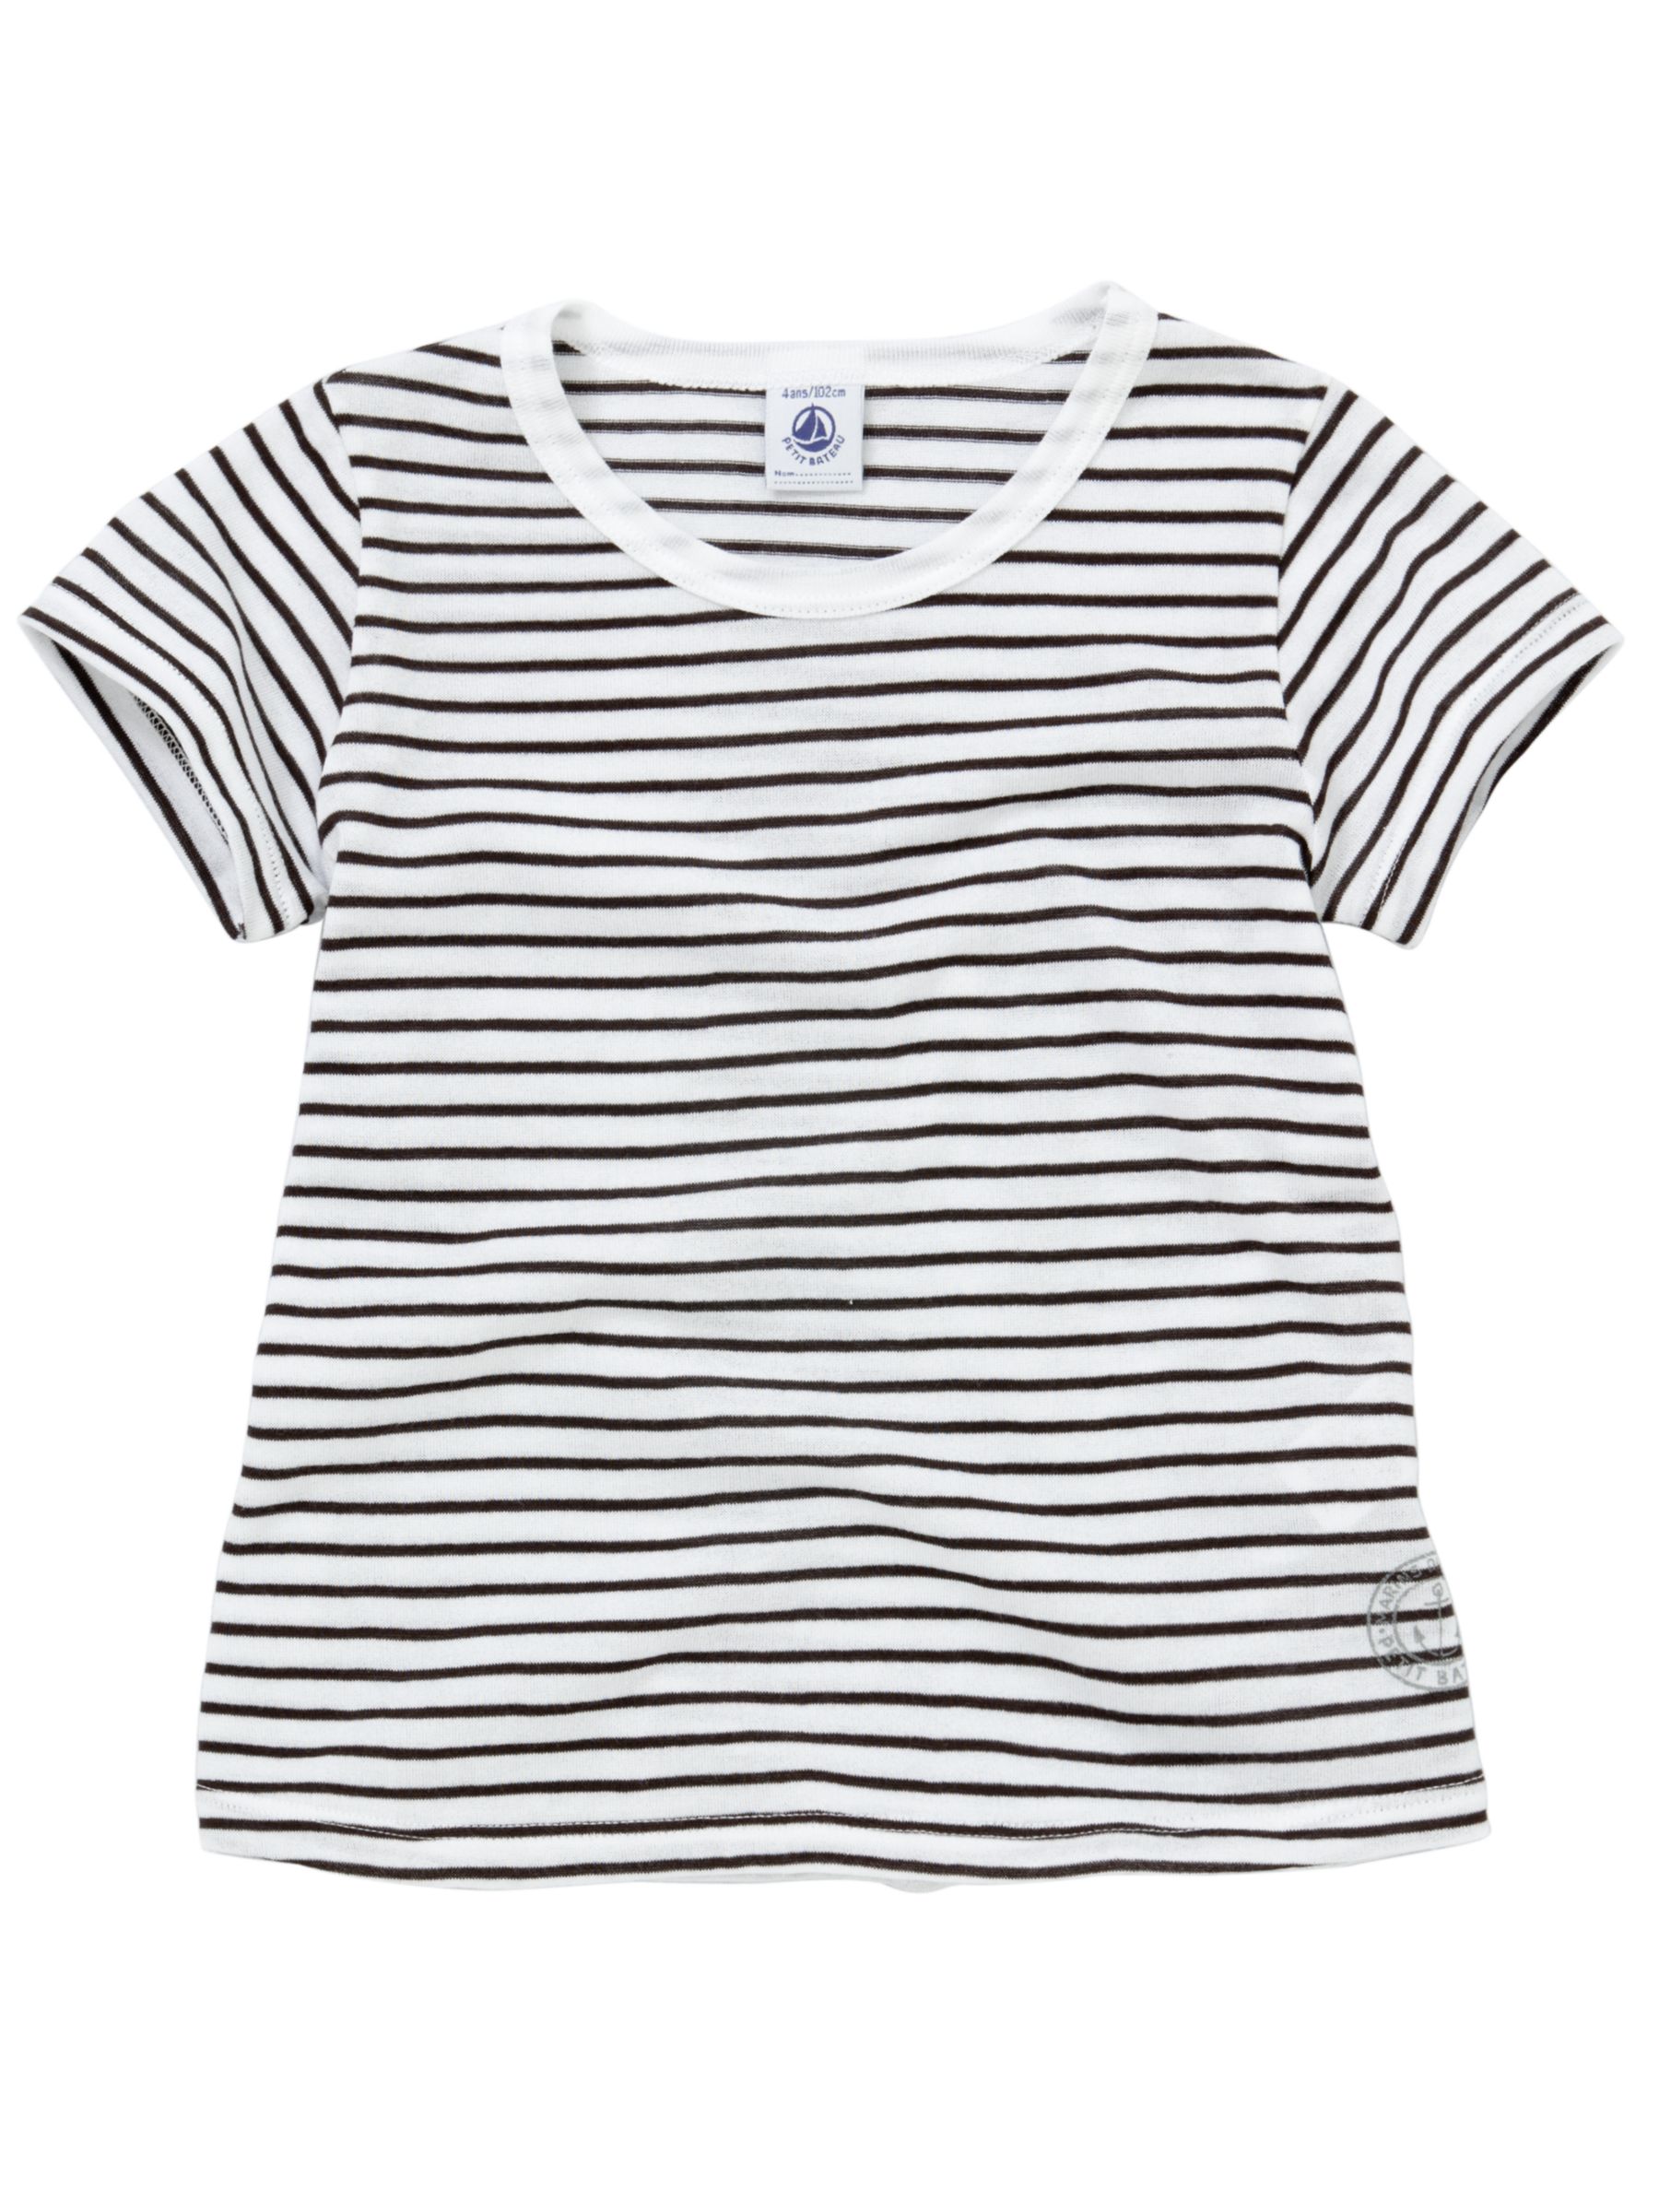 Petit Bateau Stripe Print Short Sleeve T-Shirt,